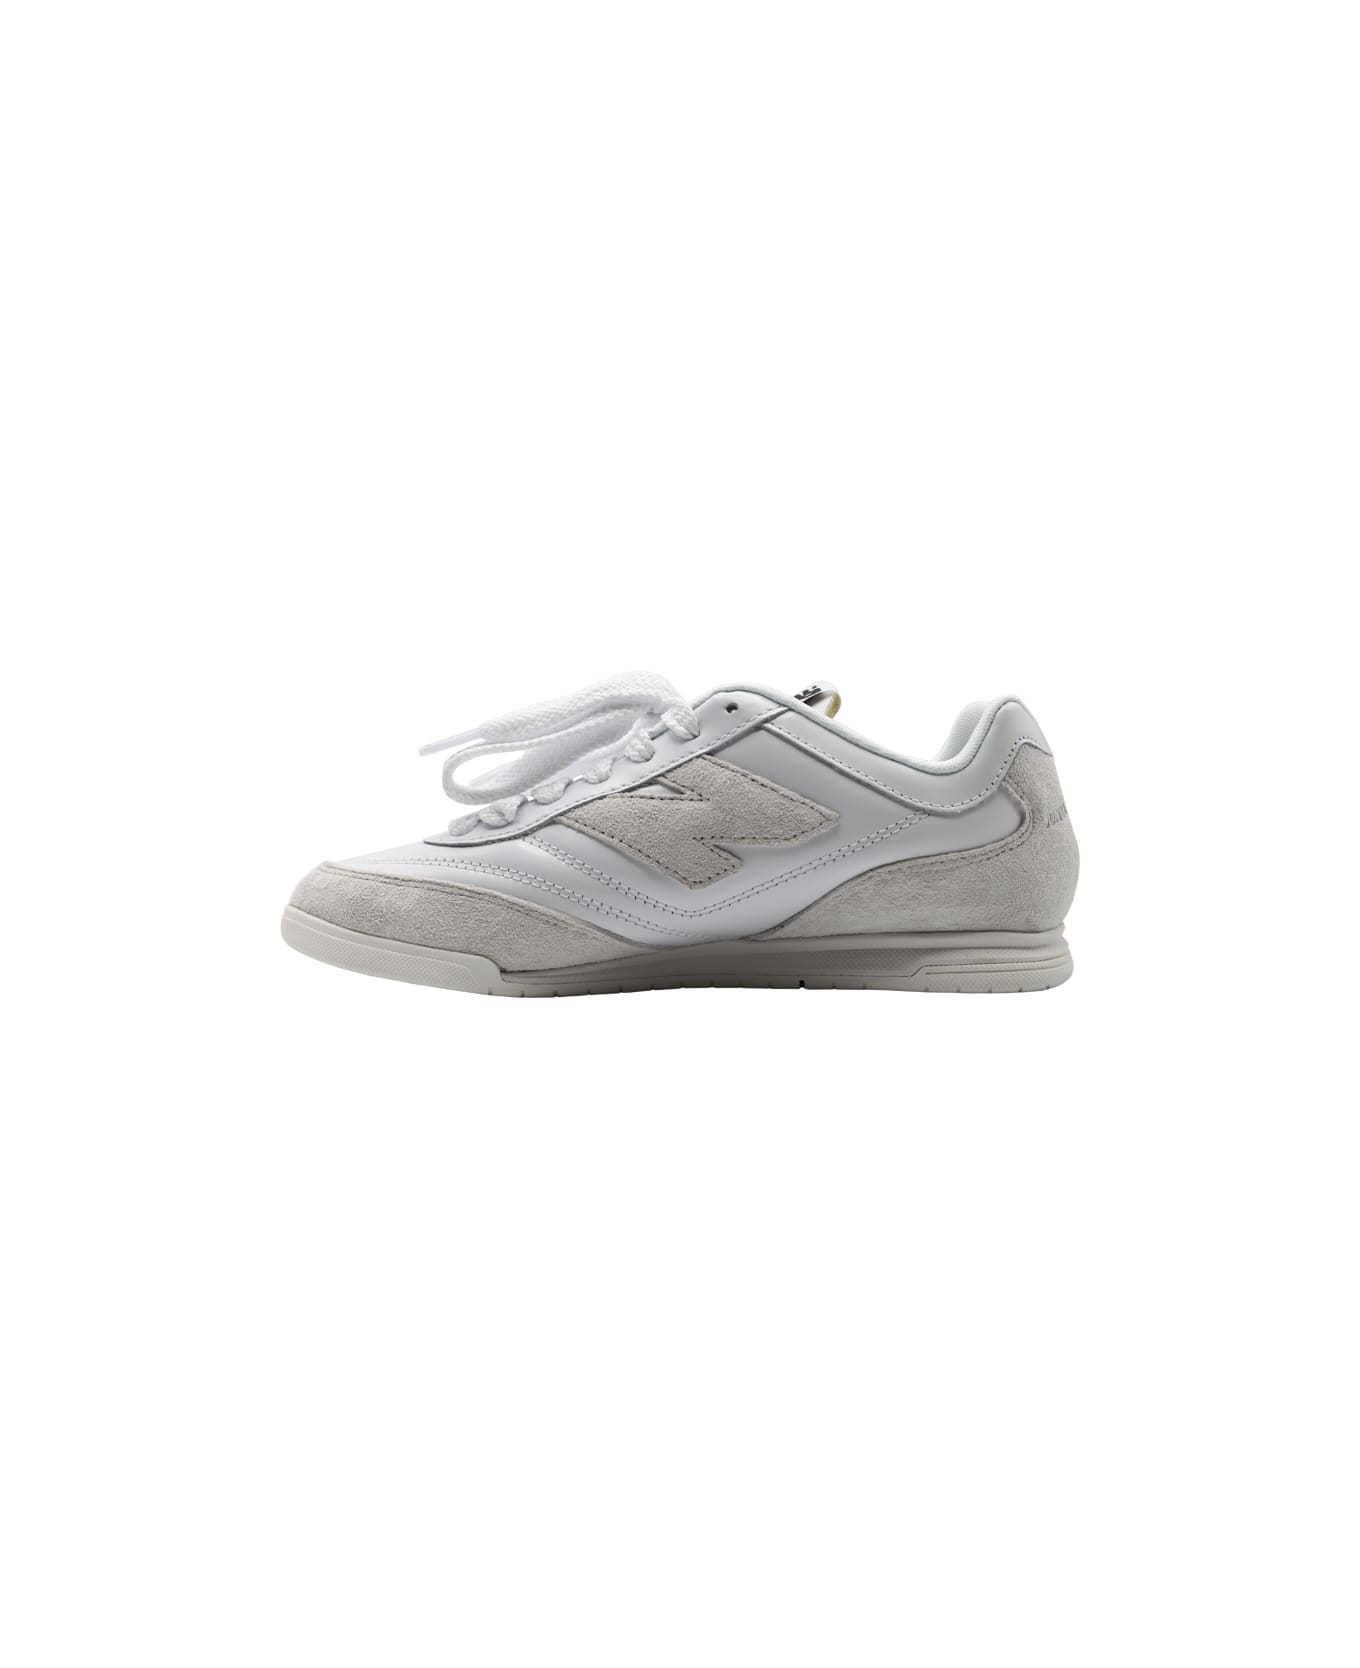 New Balance Junya Watanabe X New Balance Urc42 Sneakers - White スニーカー